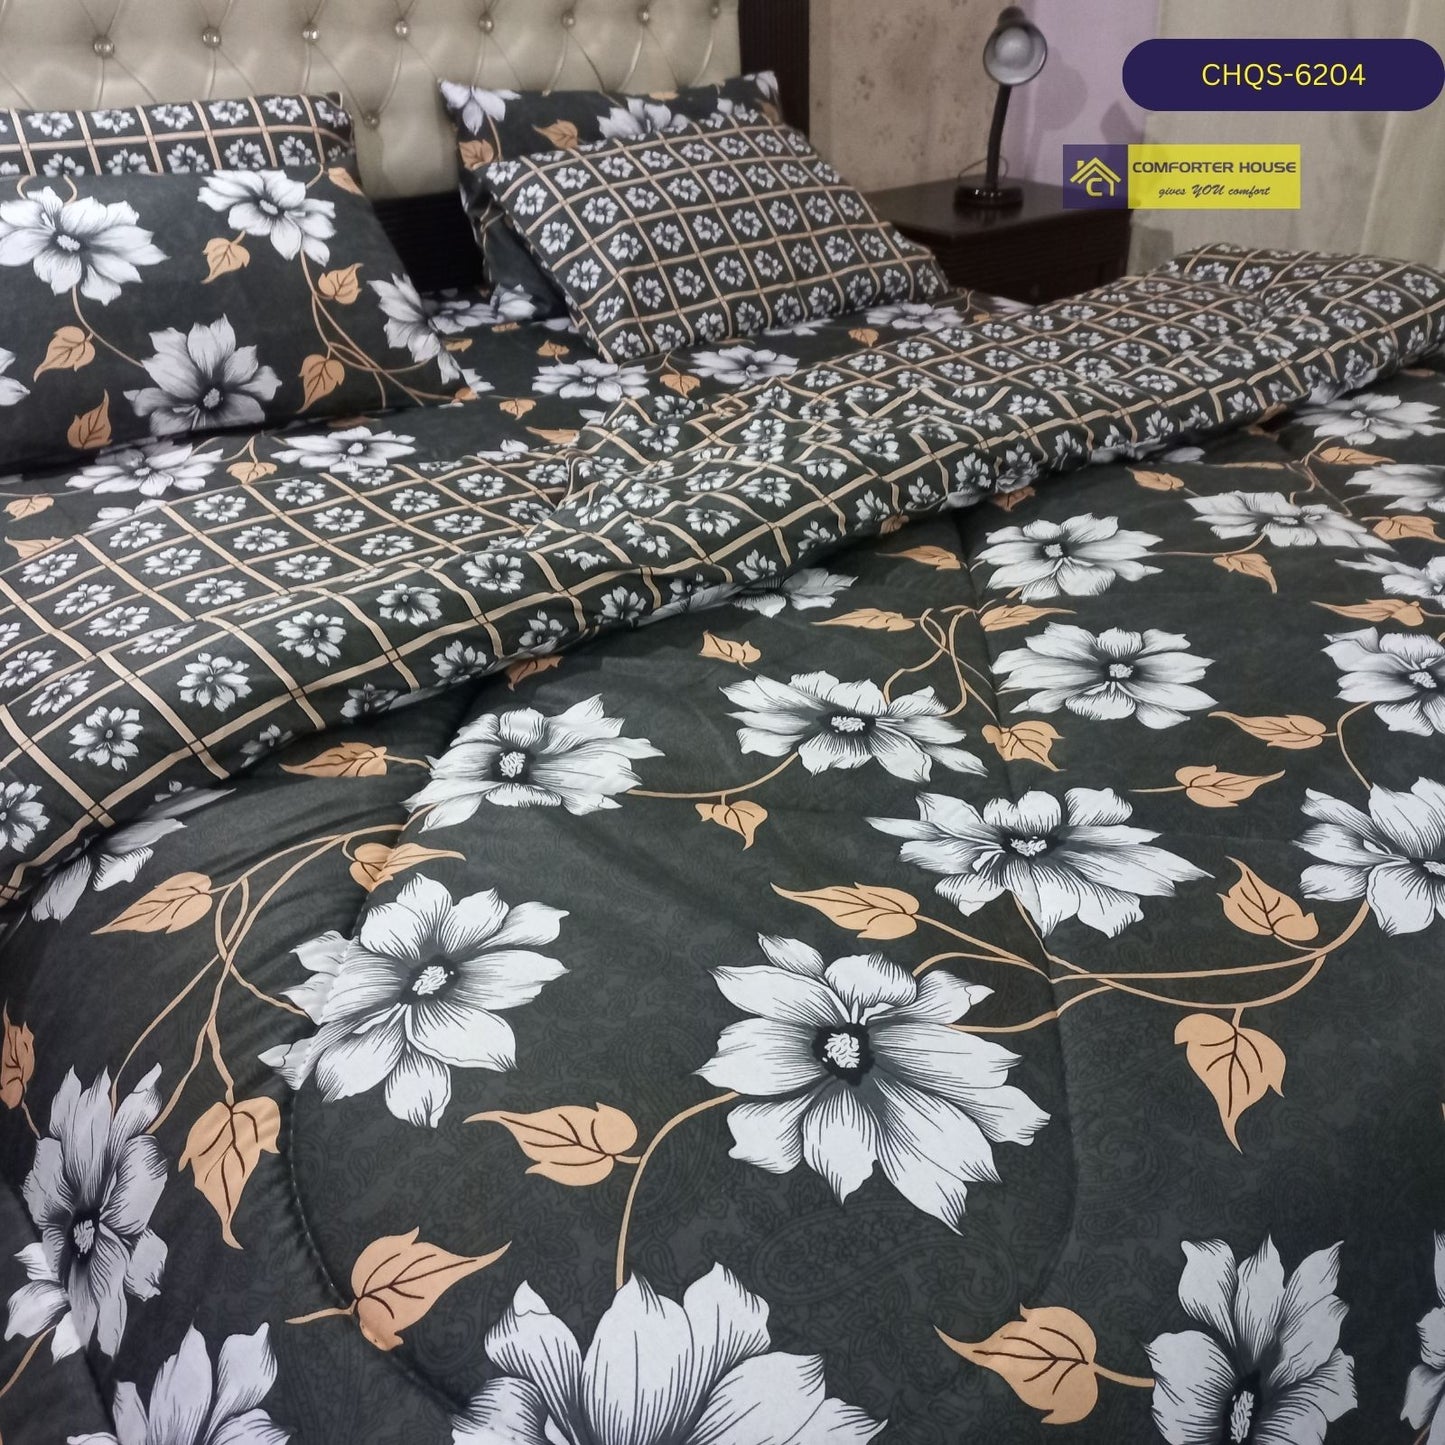 6 Pcs Vicky Razai Set | Mix Cotton | Double Bed | King Size | CHQS-6204 | Comforter House